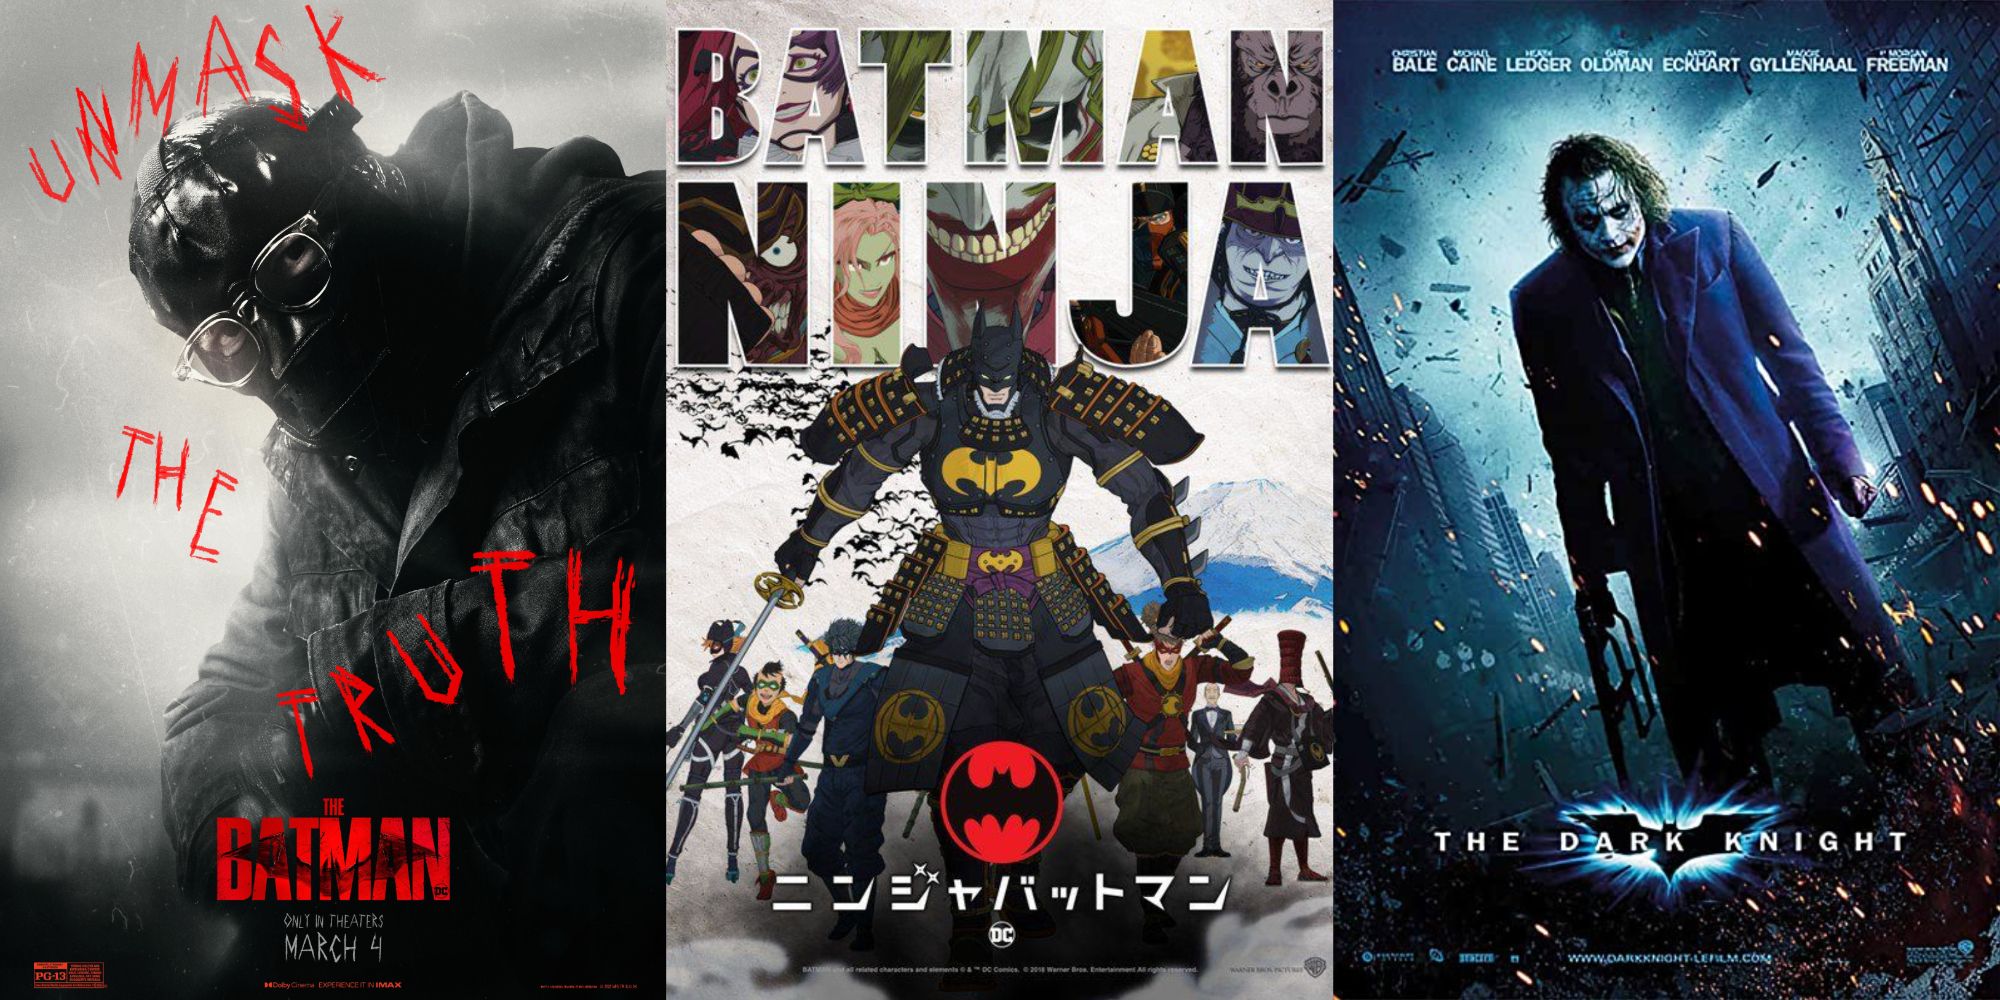 A split image of Batman movie posters.